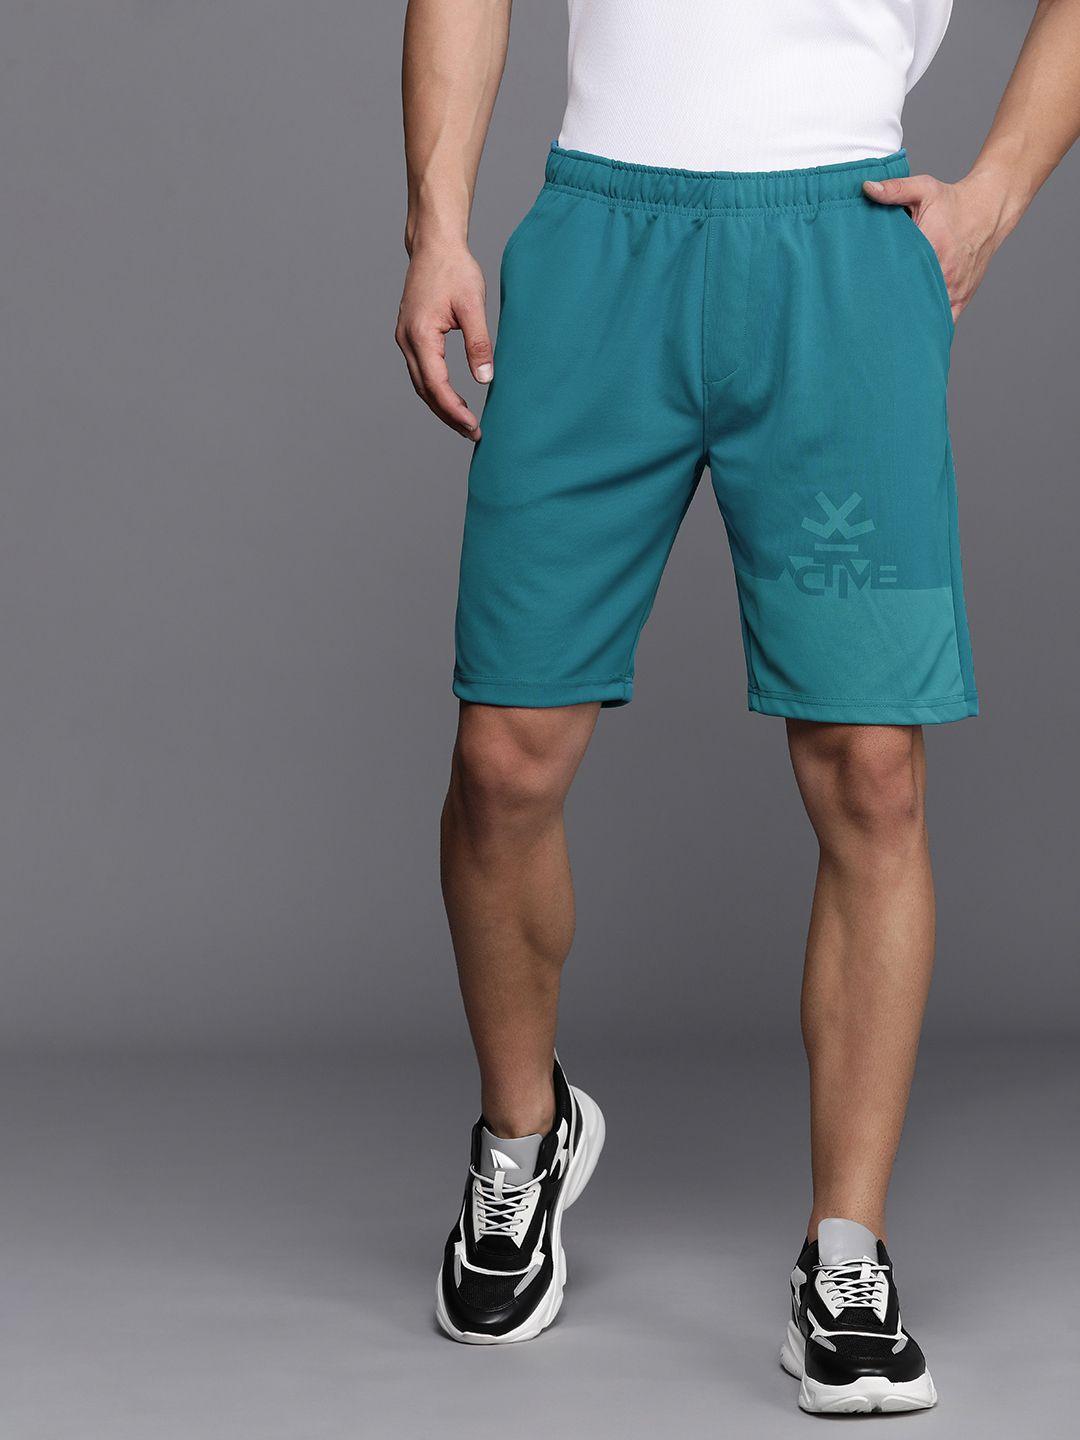 wrogn active men brand logo printed sports shorts